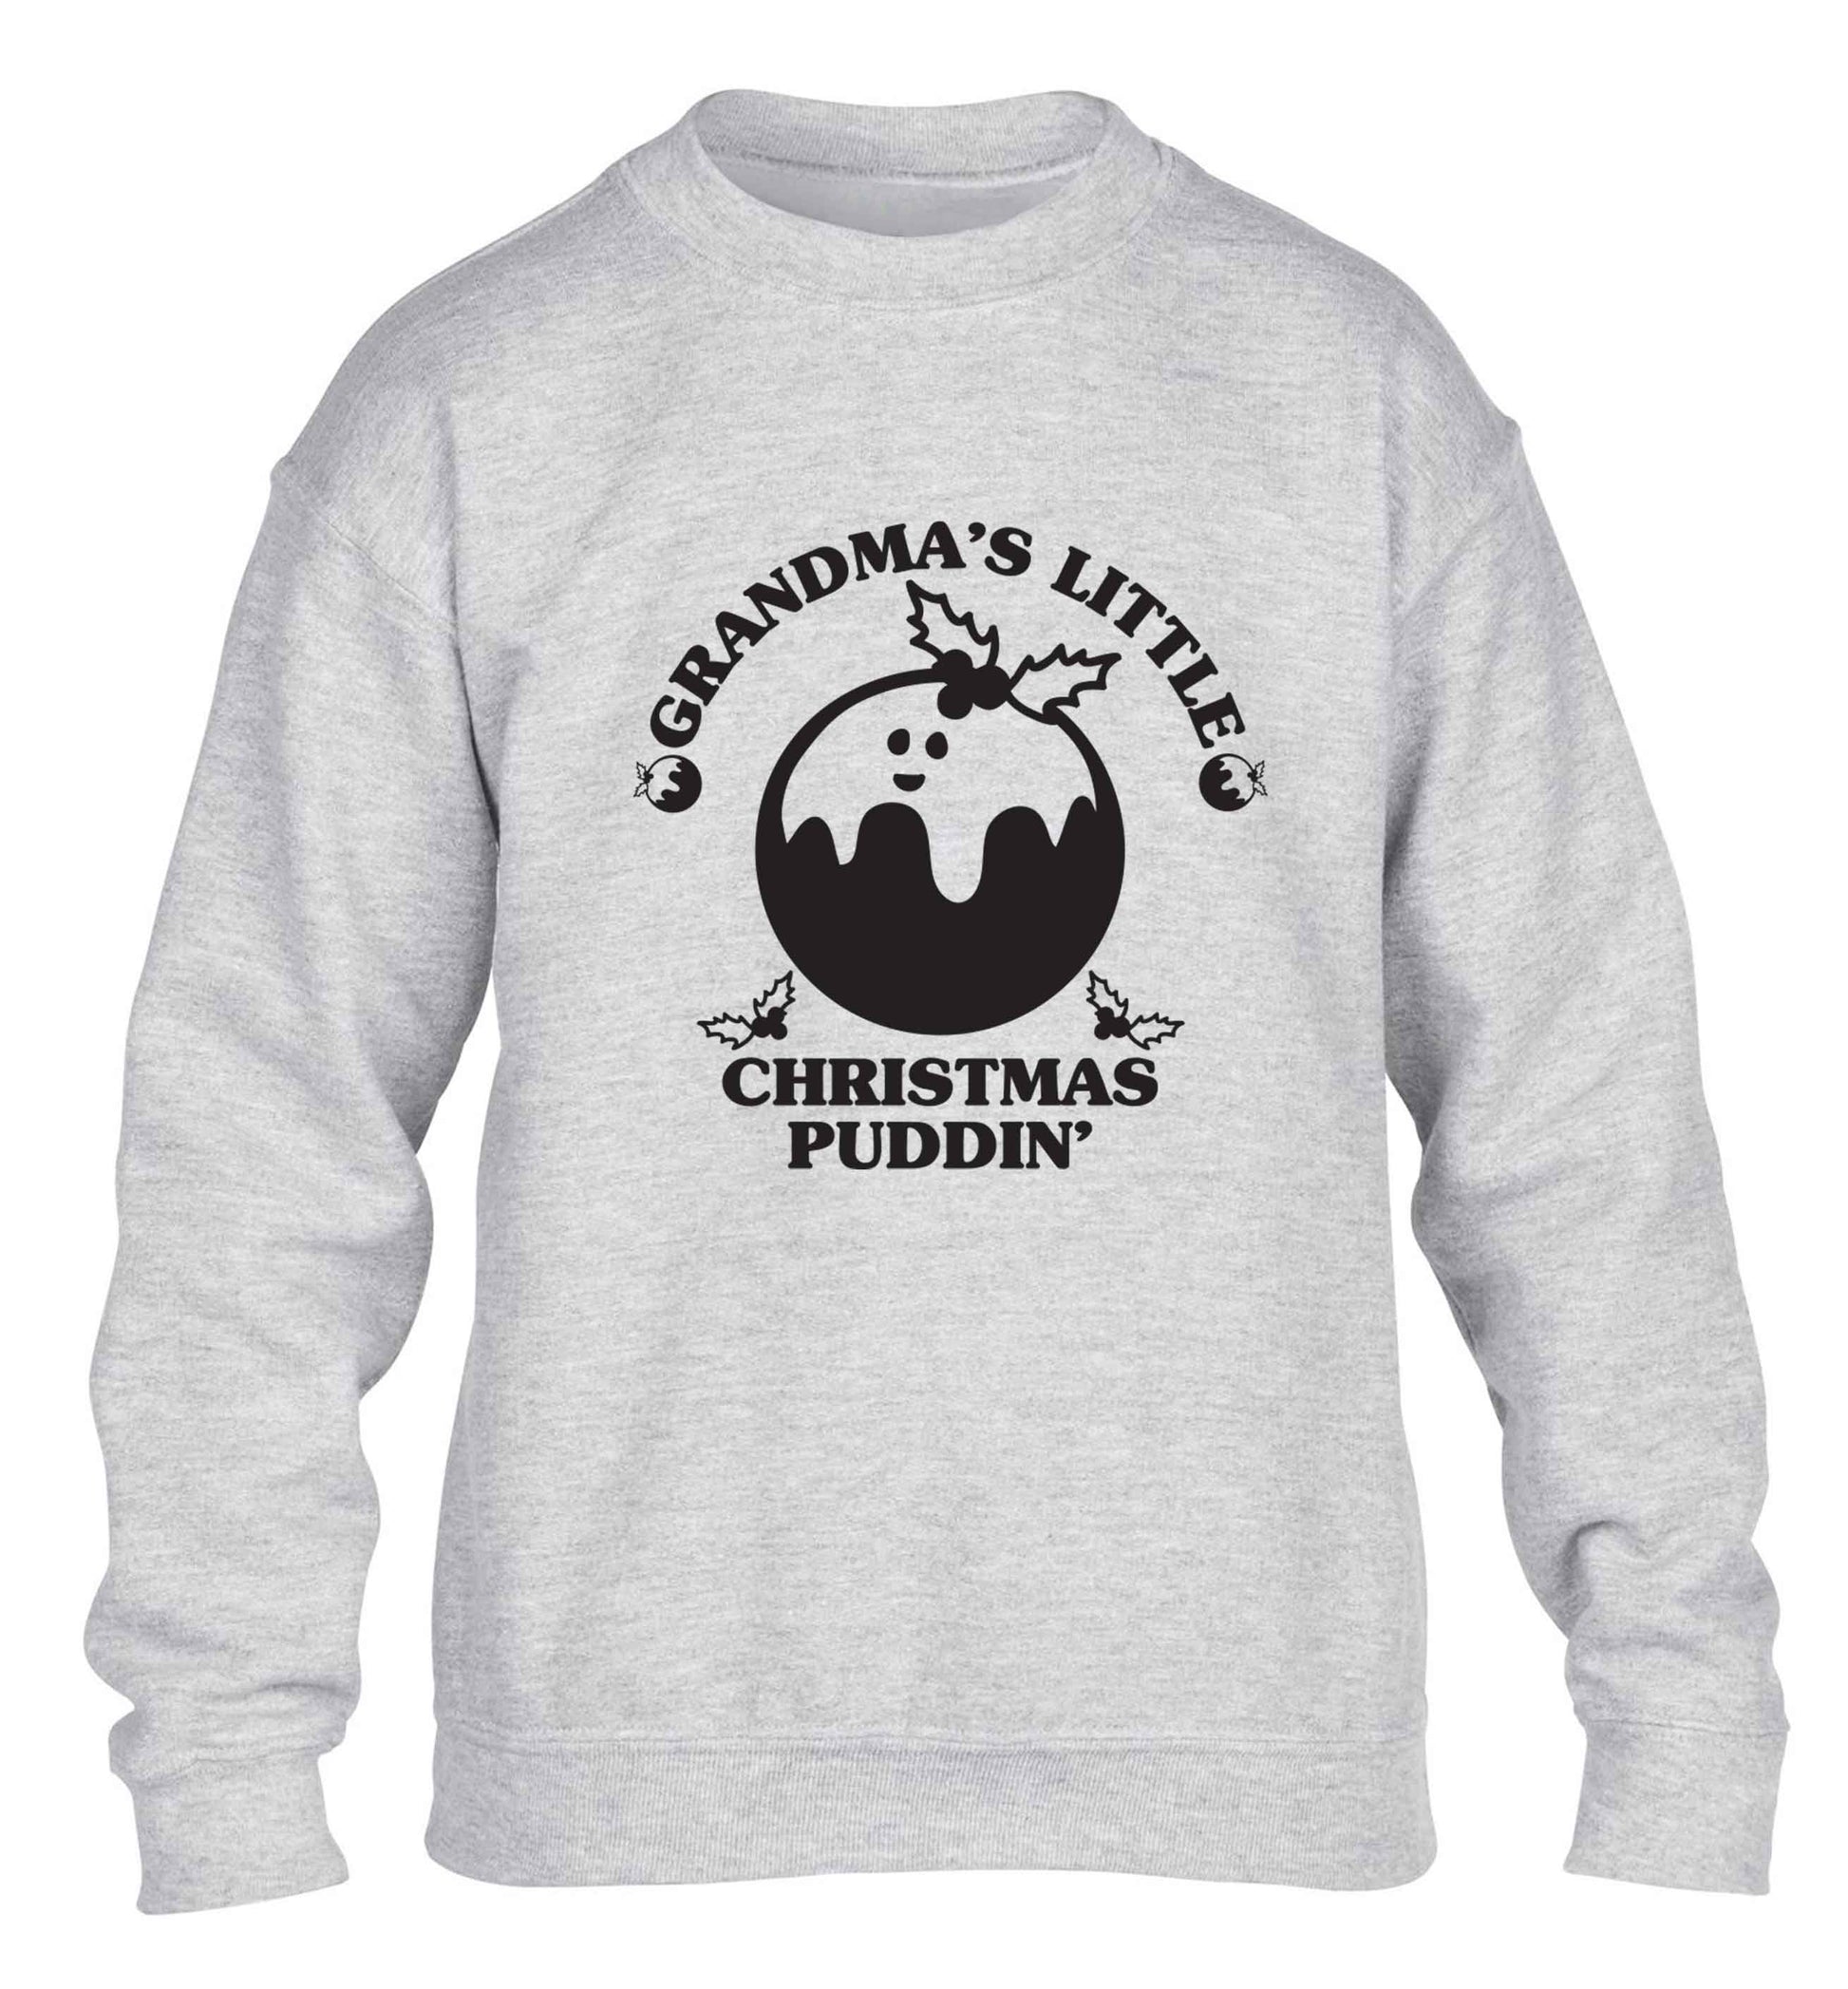 Grandma's little Christmas puddin' children's grey sweater 12-13 Years